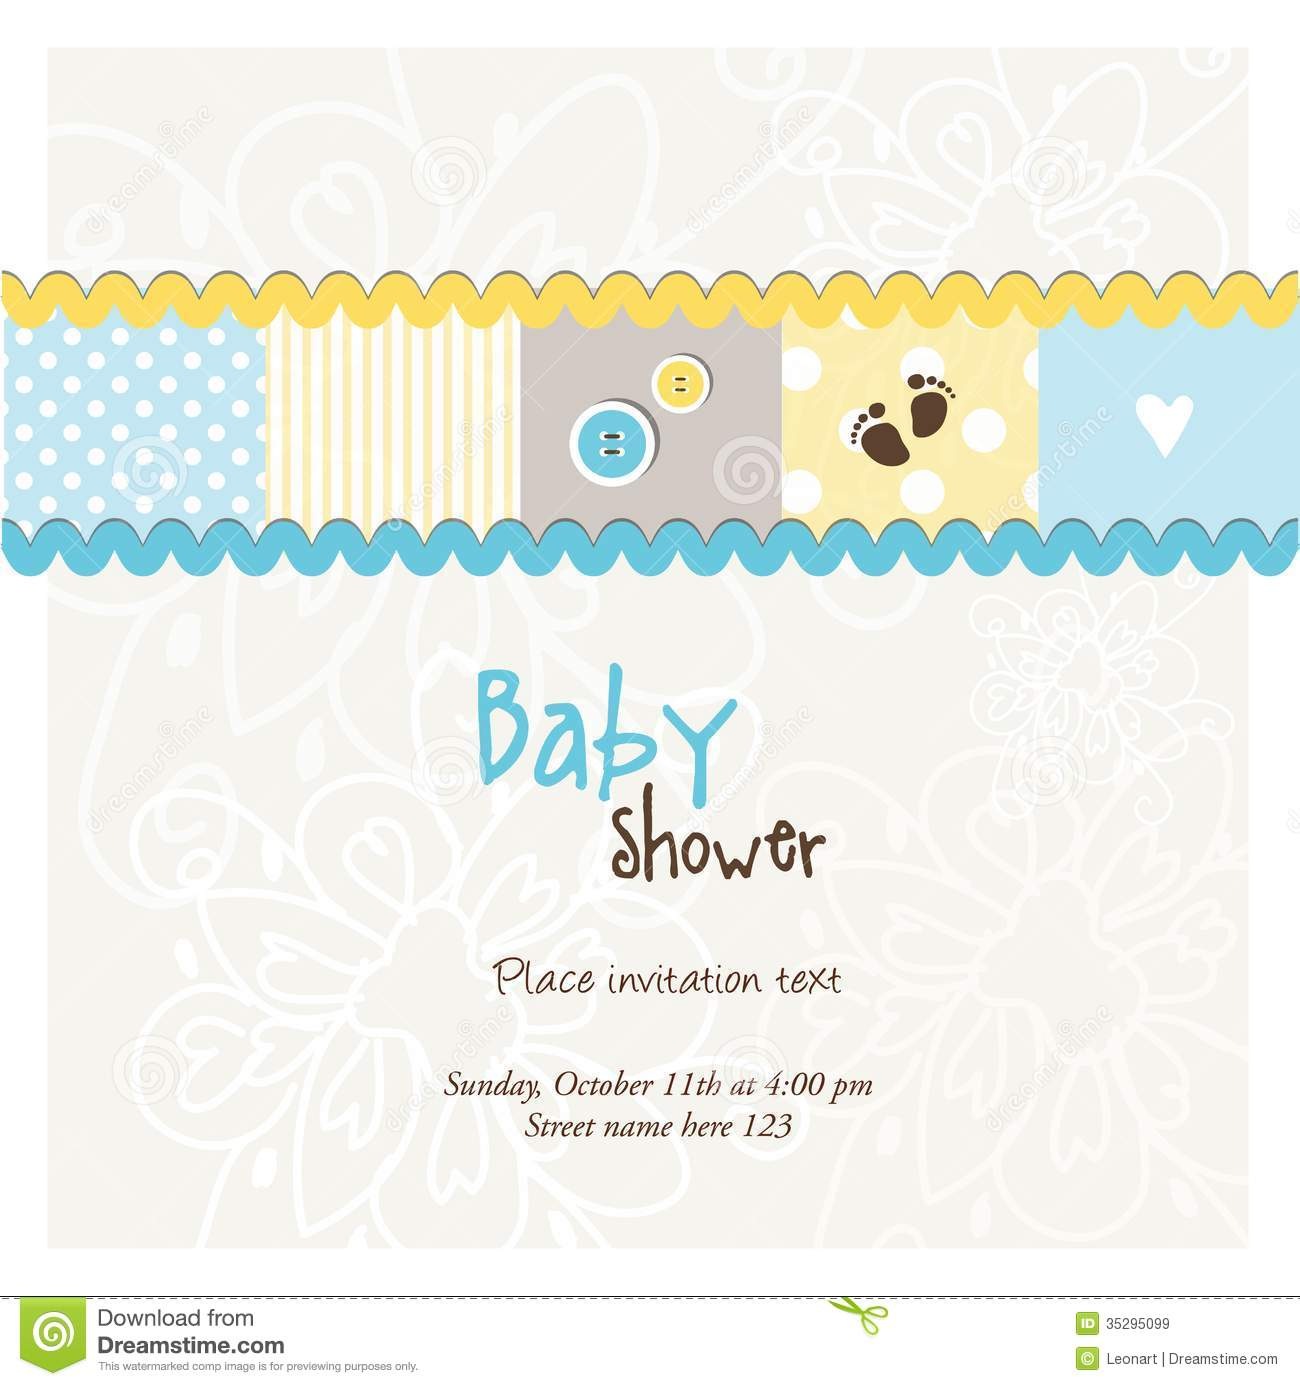 Full Size of Baby Shower:stylish Baby Shower Wishes Picture Inspirations Baby Shower Wishes Baby Shower Card Messages For A Unique Baby Shower Greeting Baby Shower Card Messages For A Unique Baby Shower Greeting Wedding